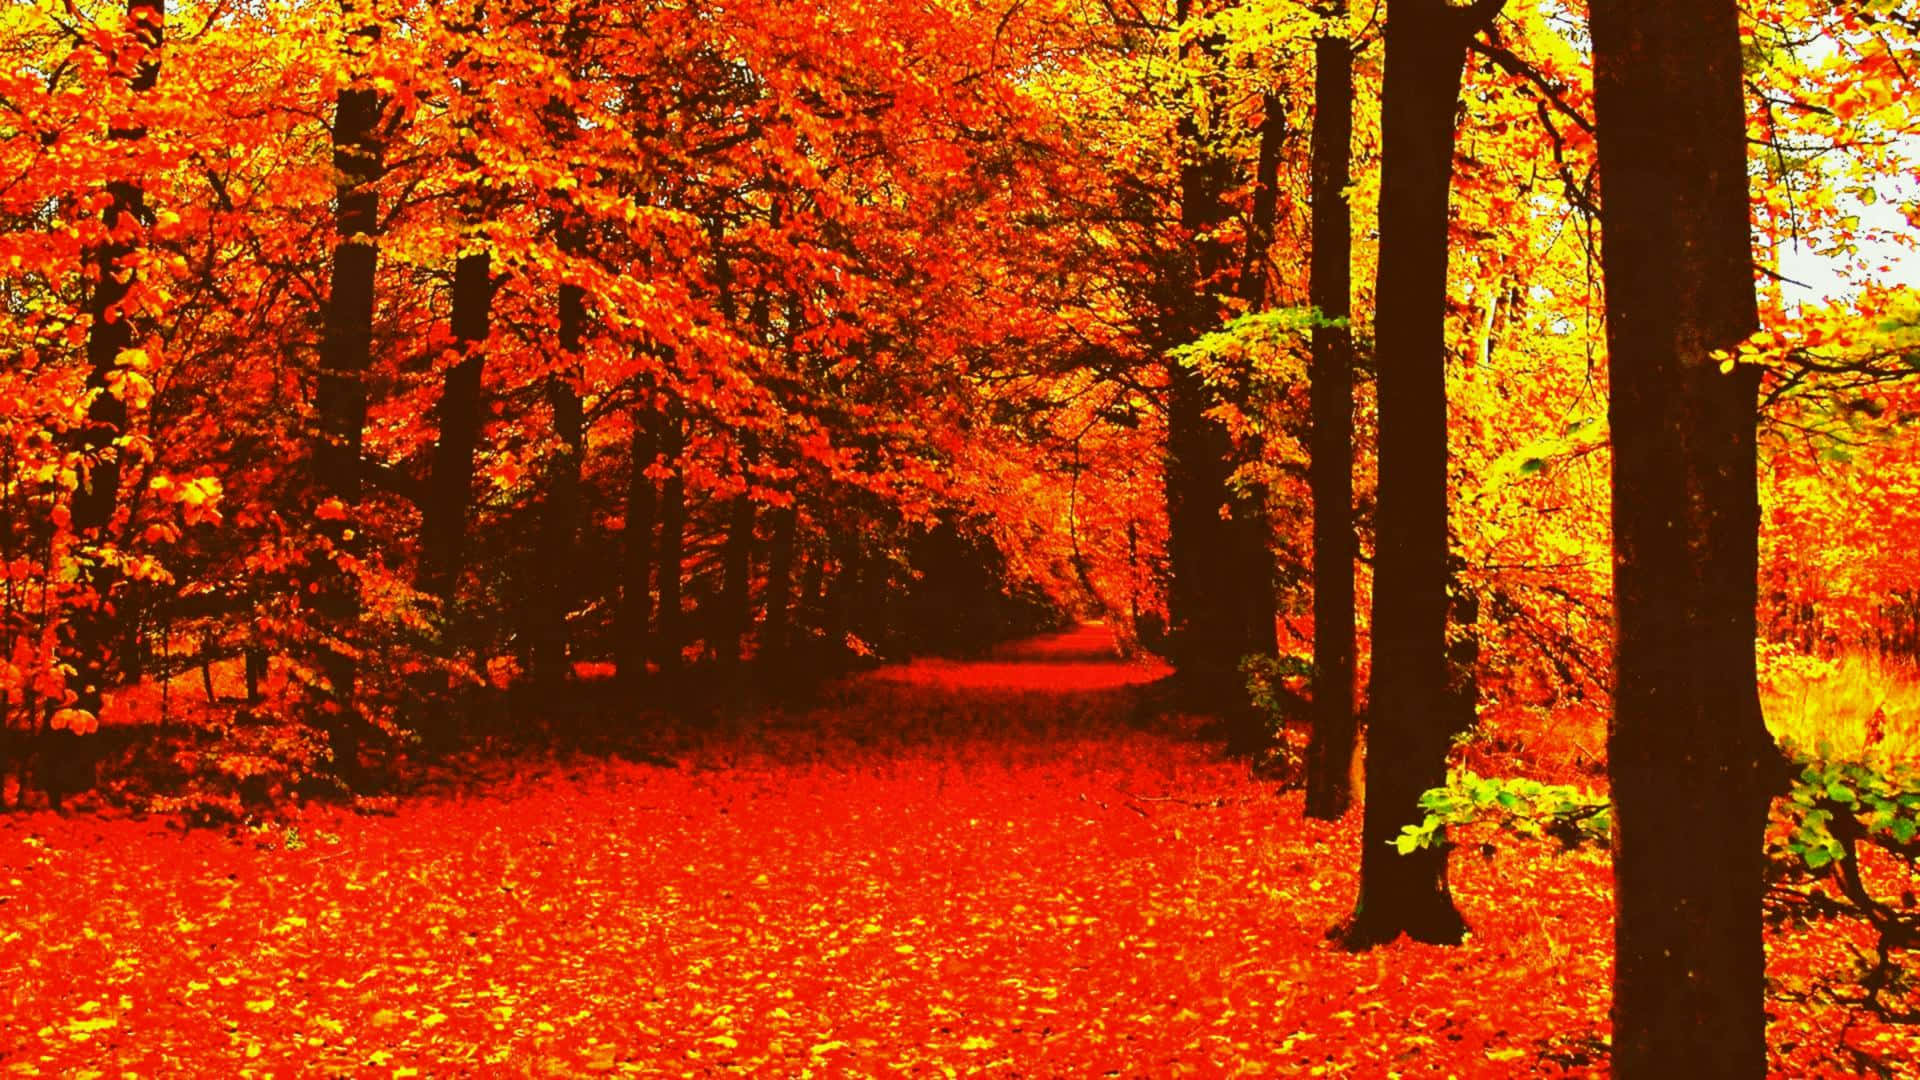 Autumn Woods With Orange Leaves Background